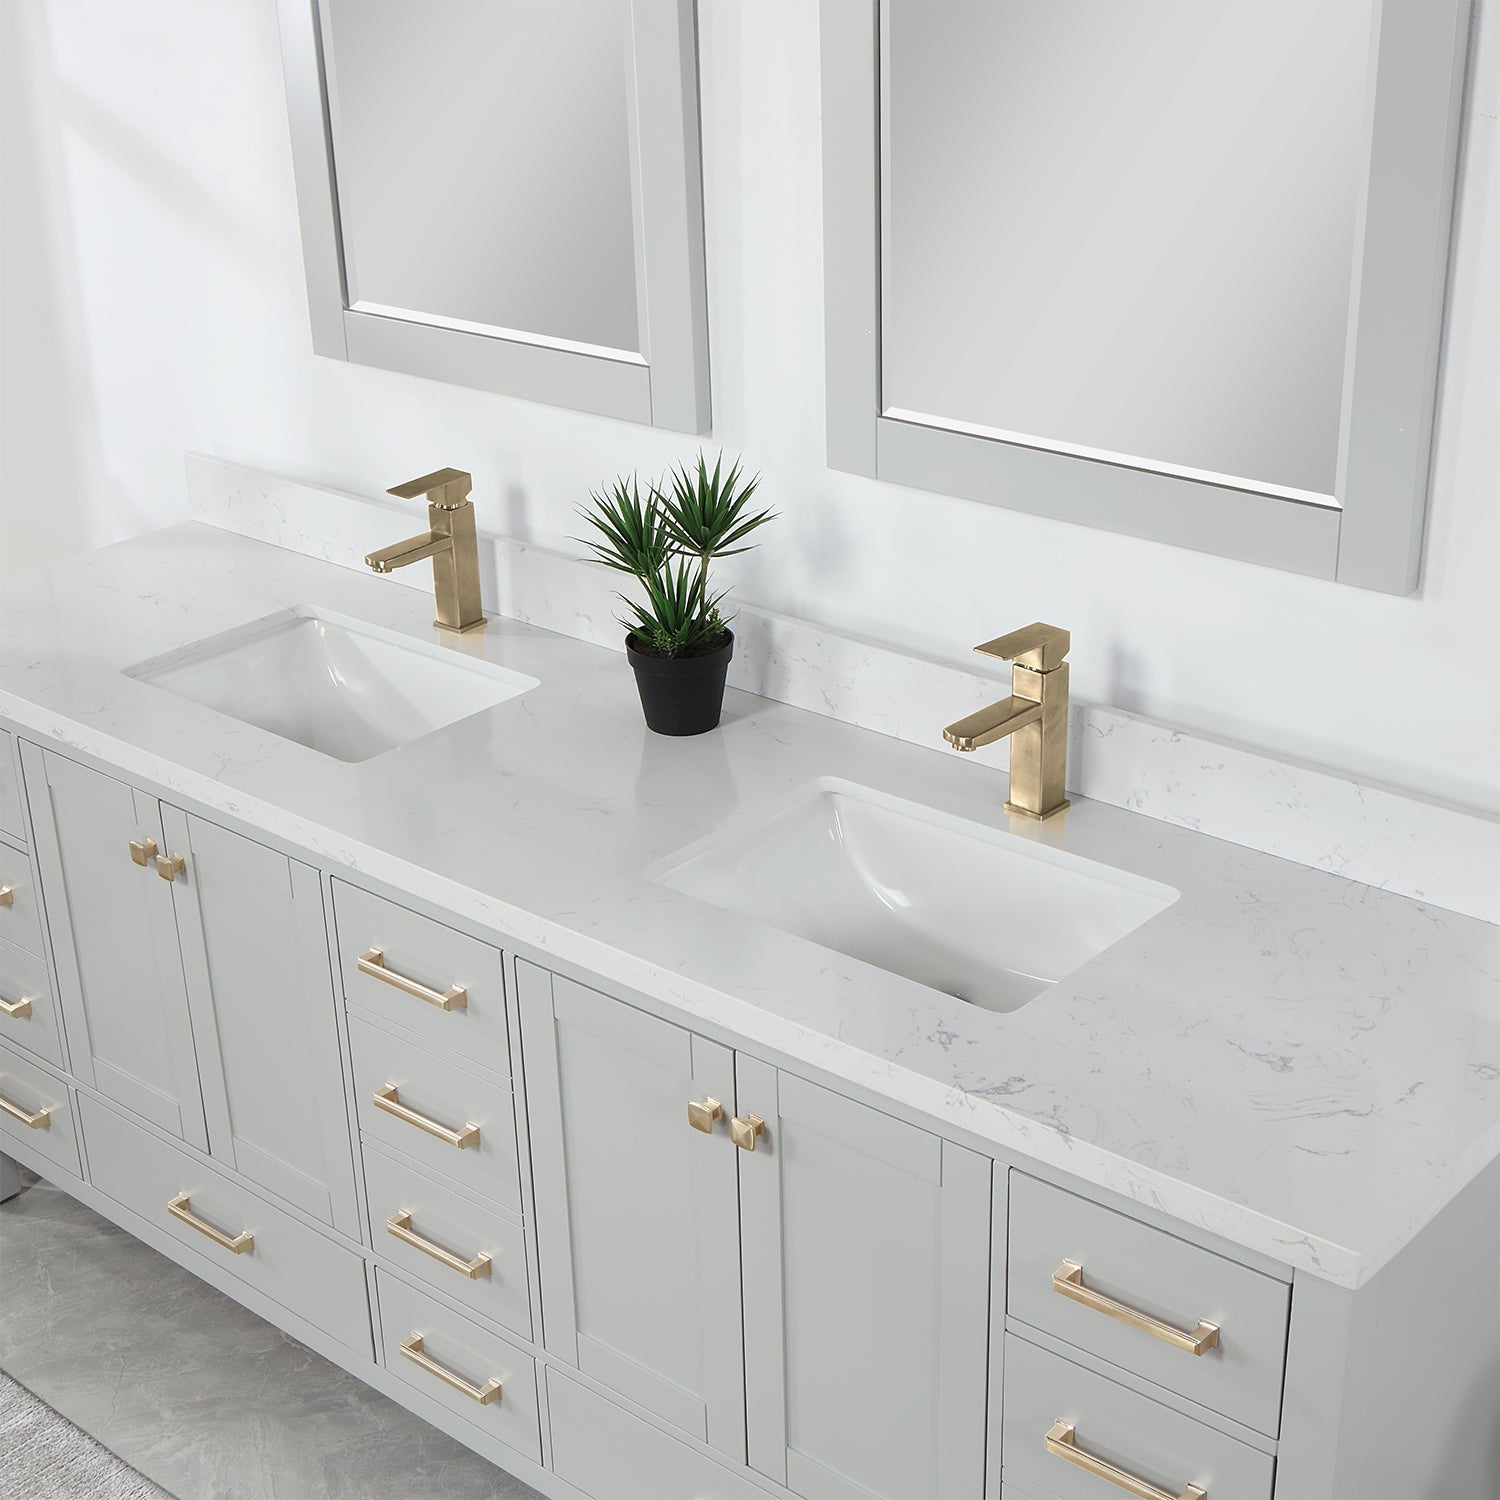 Vinnova Design Shannon 84" Double Vanity in Paris Grey and Composite Carrara White Stone Countertop - New Star Living